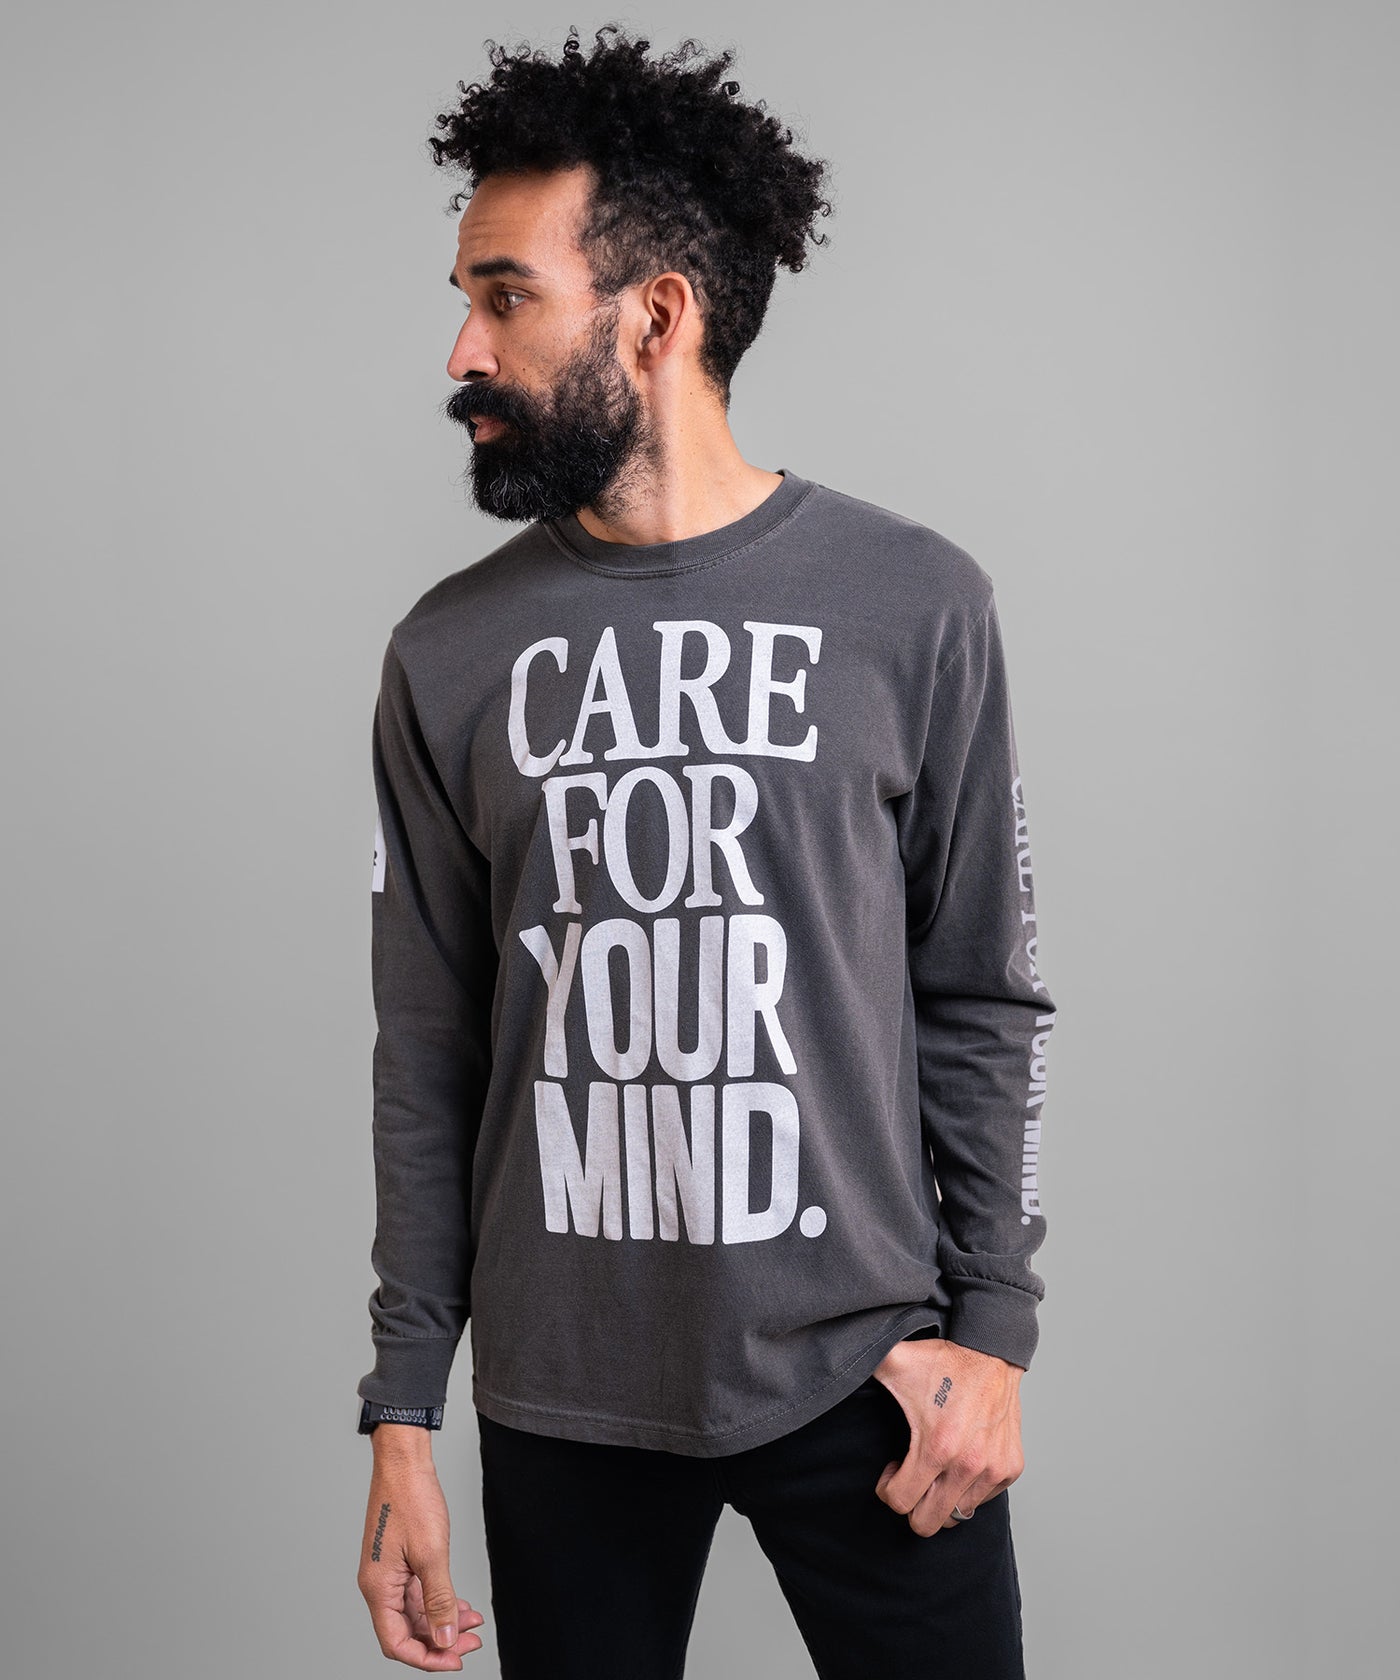 Self-Care Long Sleeve Shirt